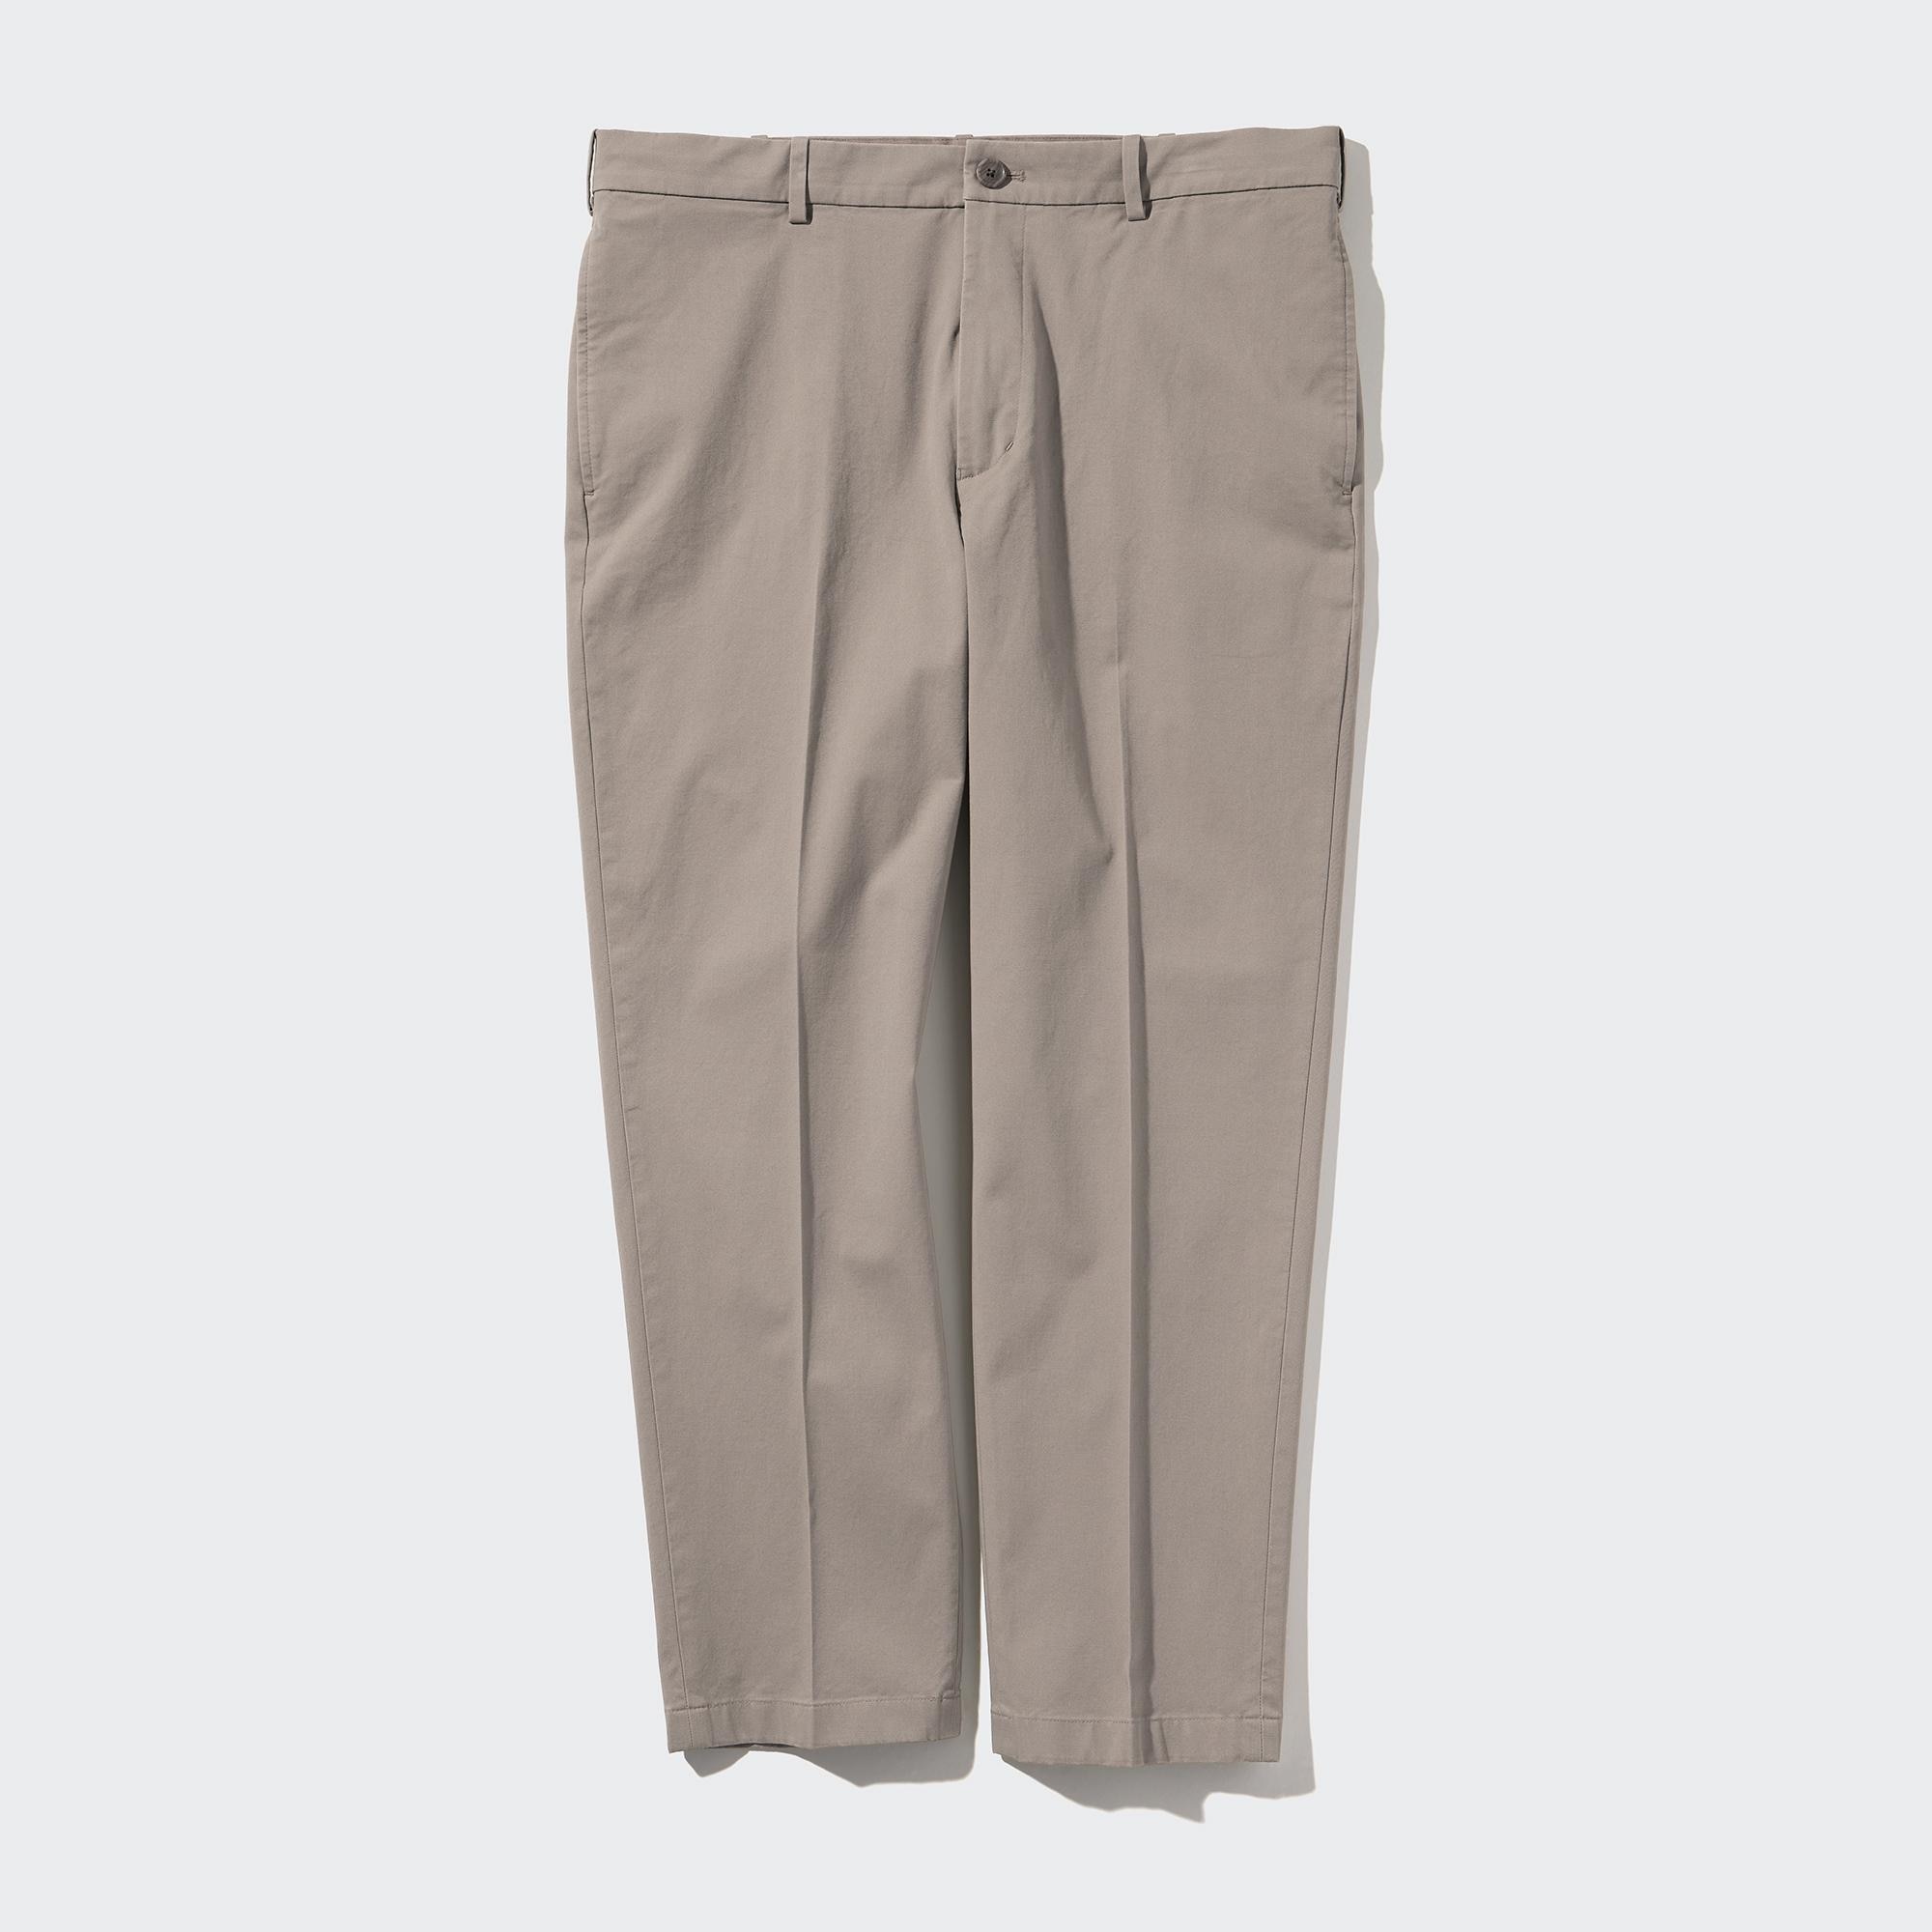 Smart Ankle Pants (2-Way Stretch, Cotton)